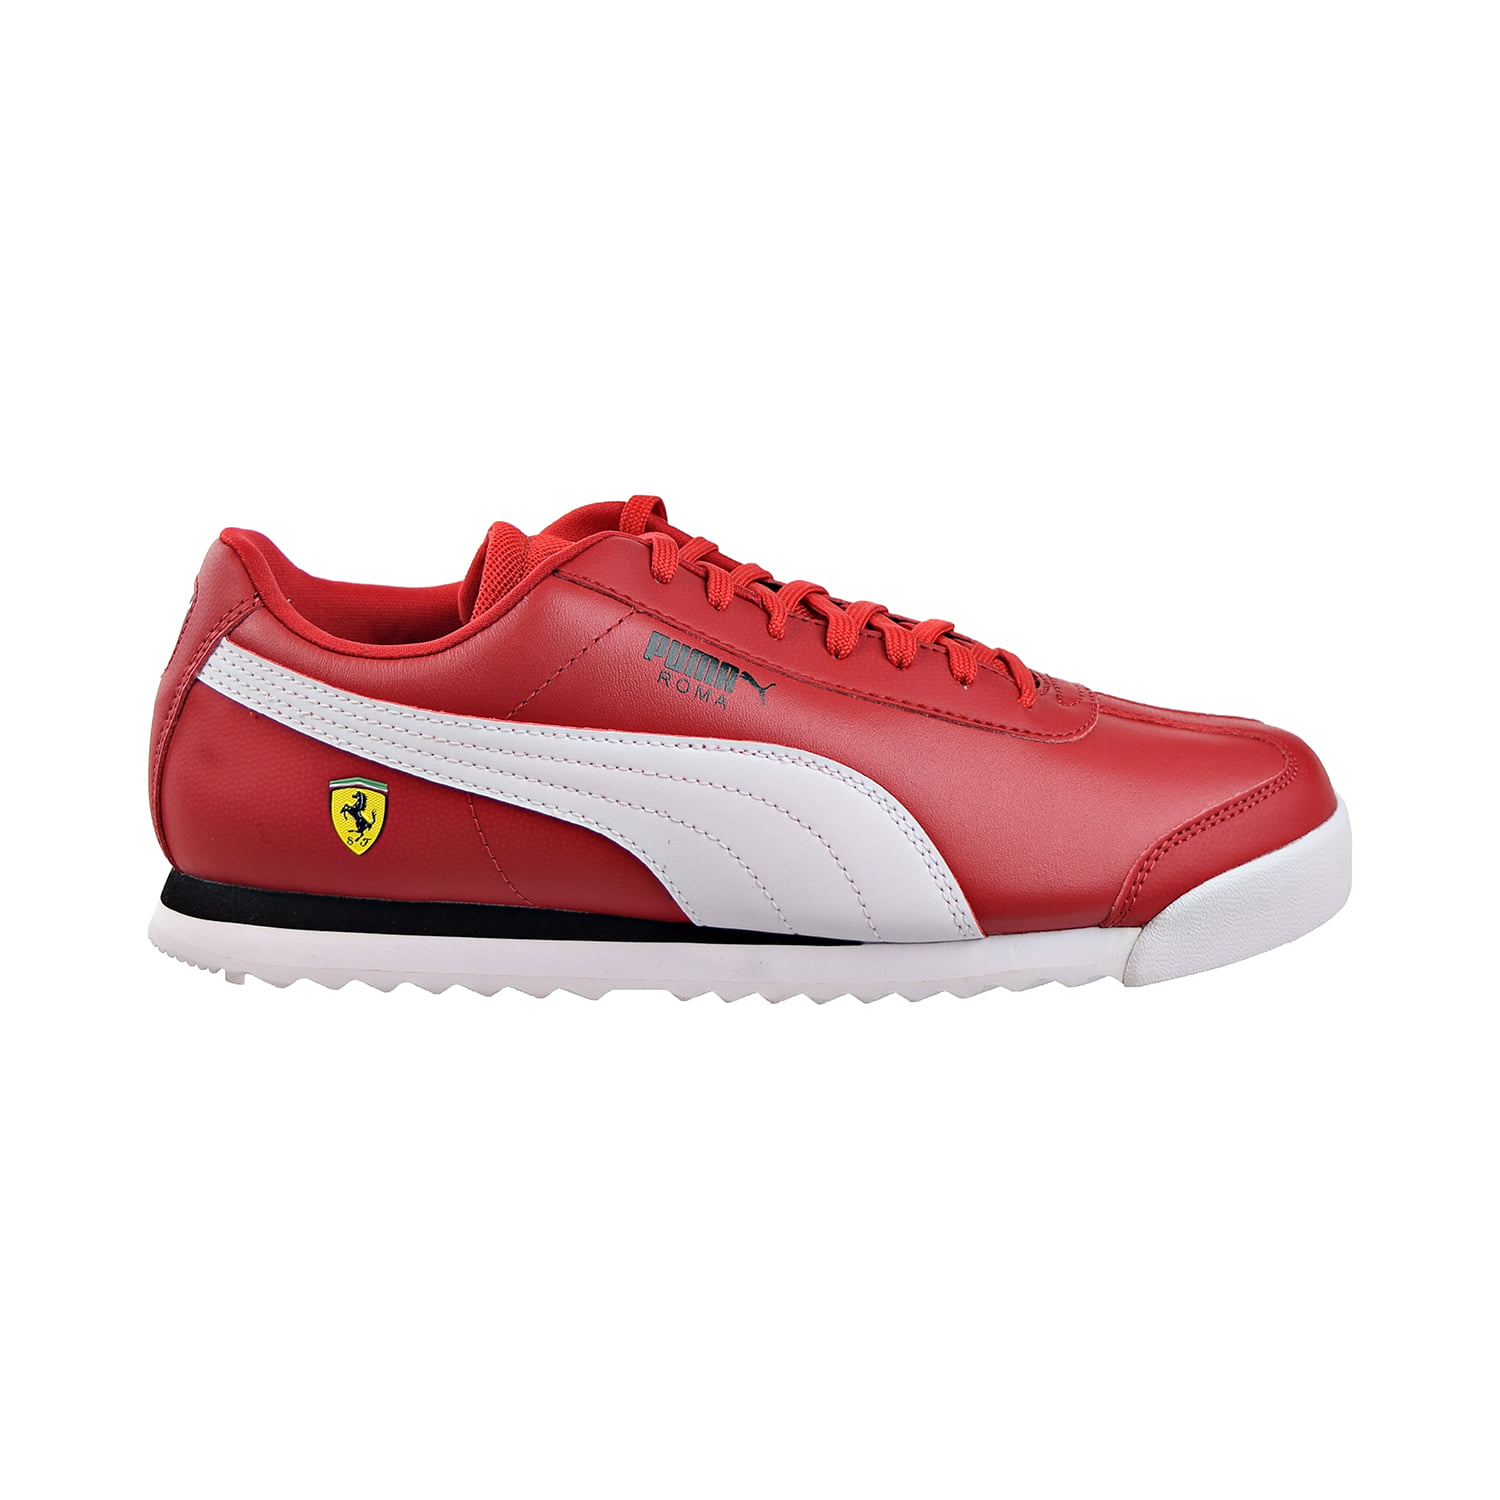 puma ferrari shoes 2012 price